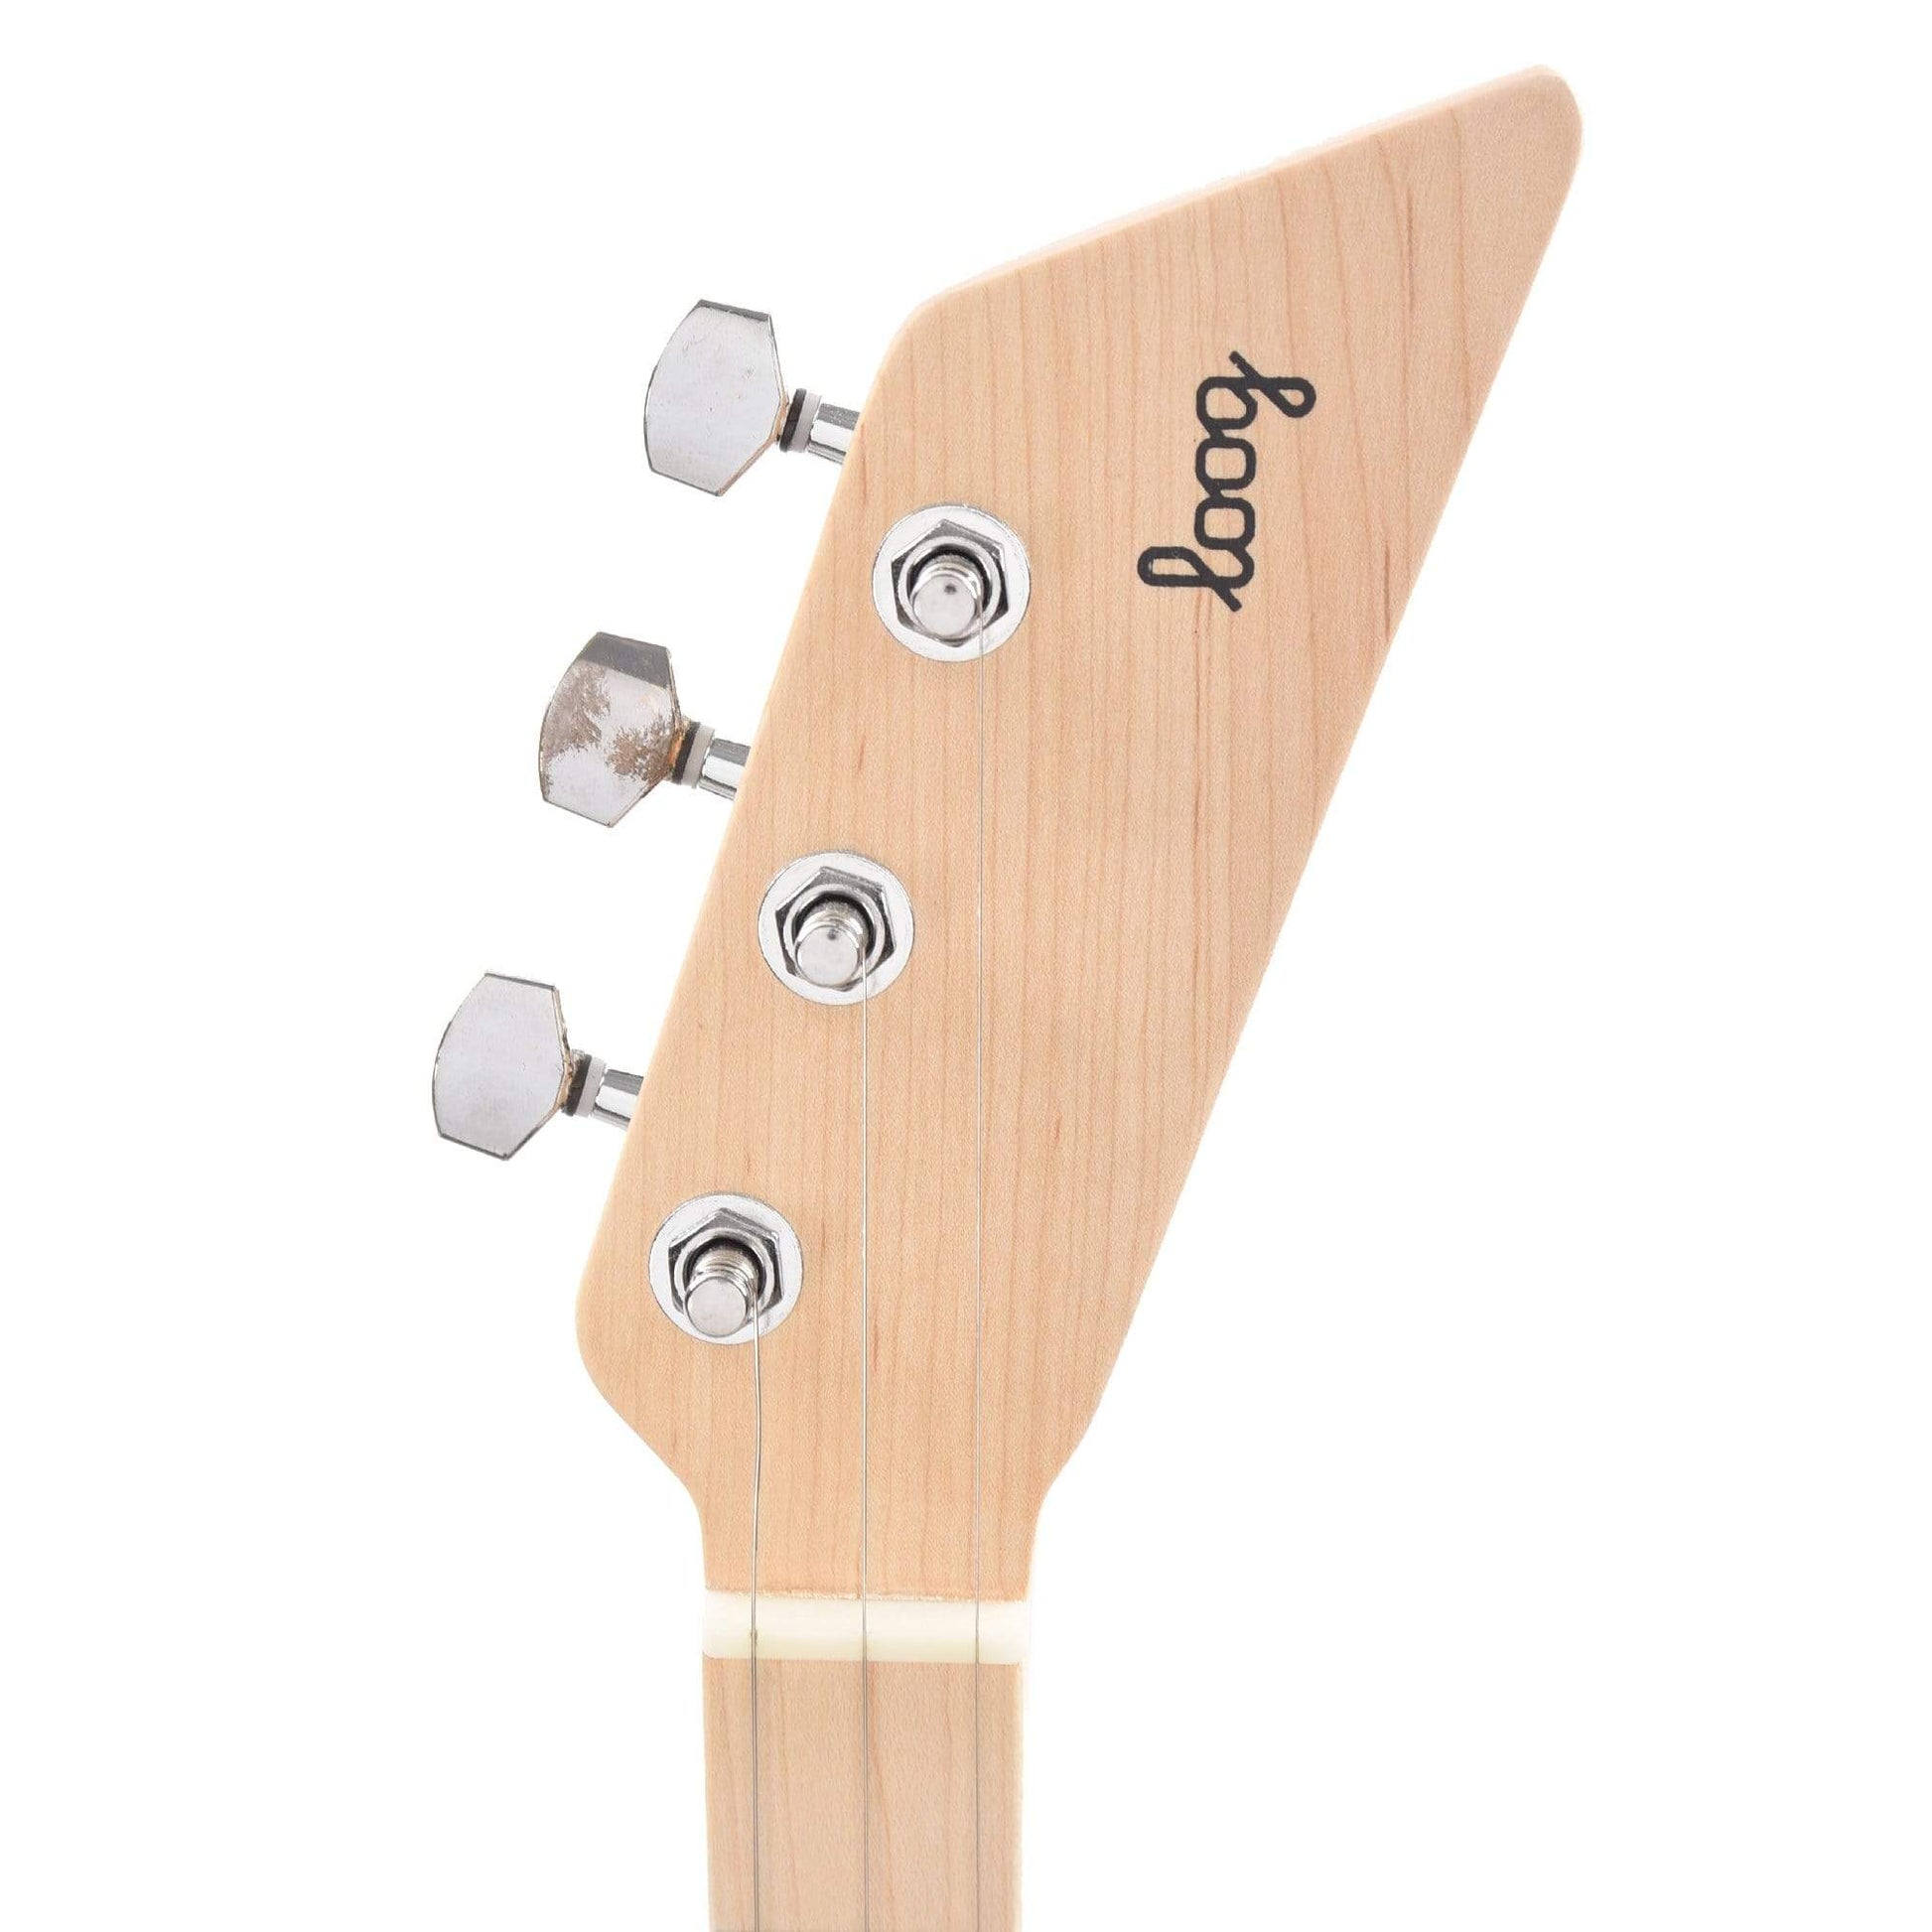 Loog Pro Electric Guitar w/Built-In Amp White Electric Guitars / Travel / Mini